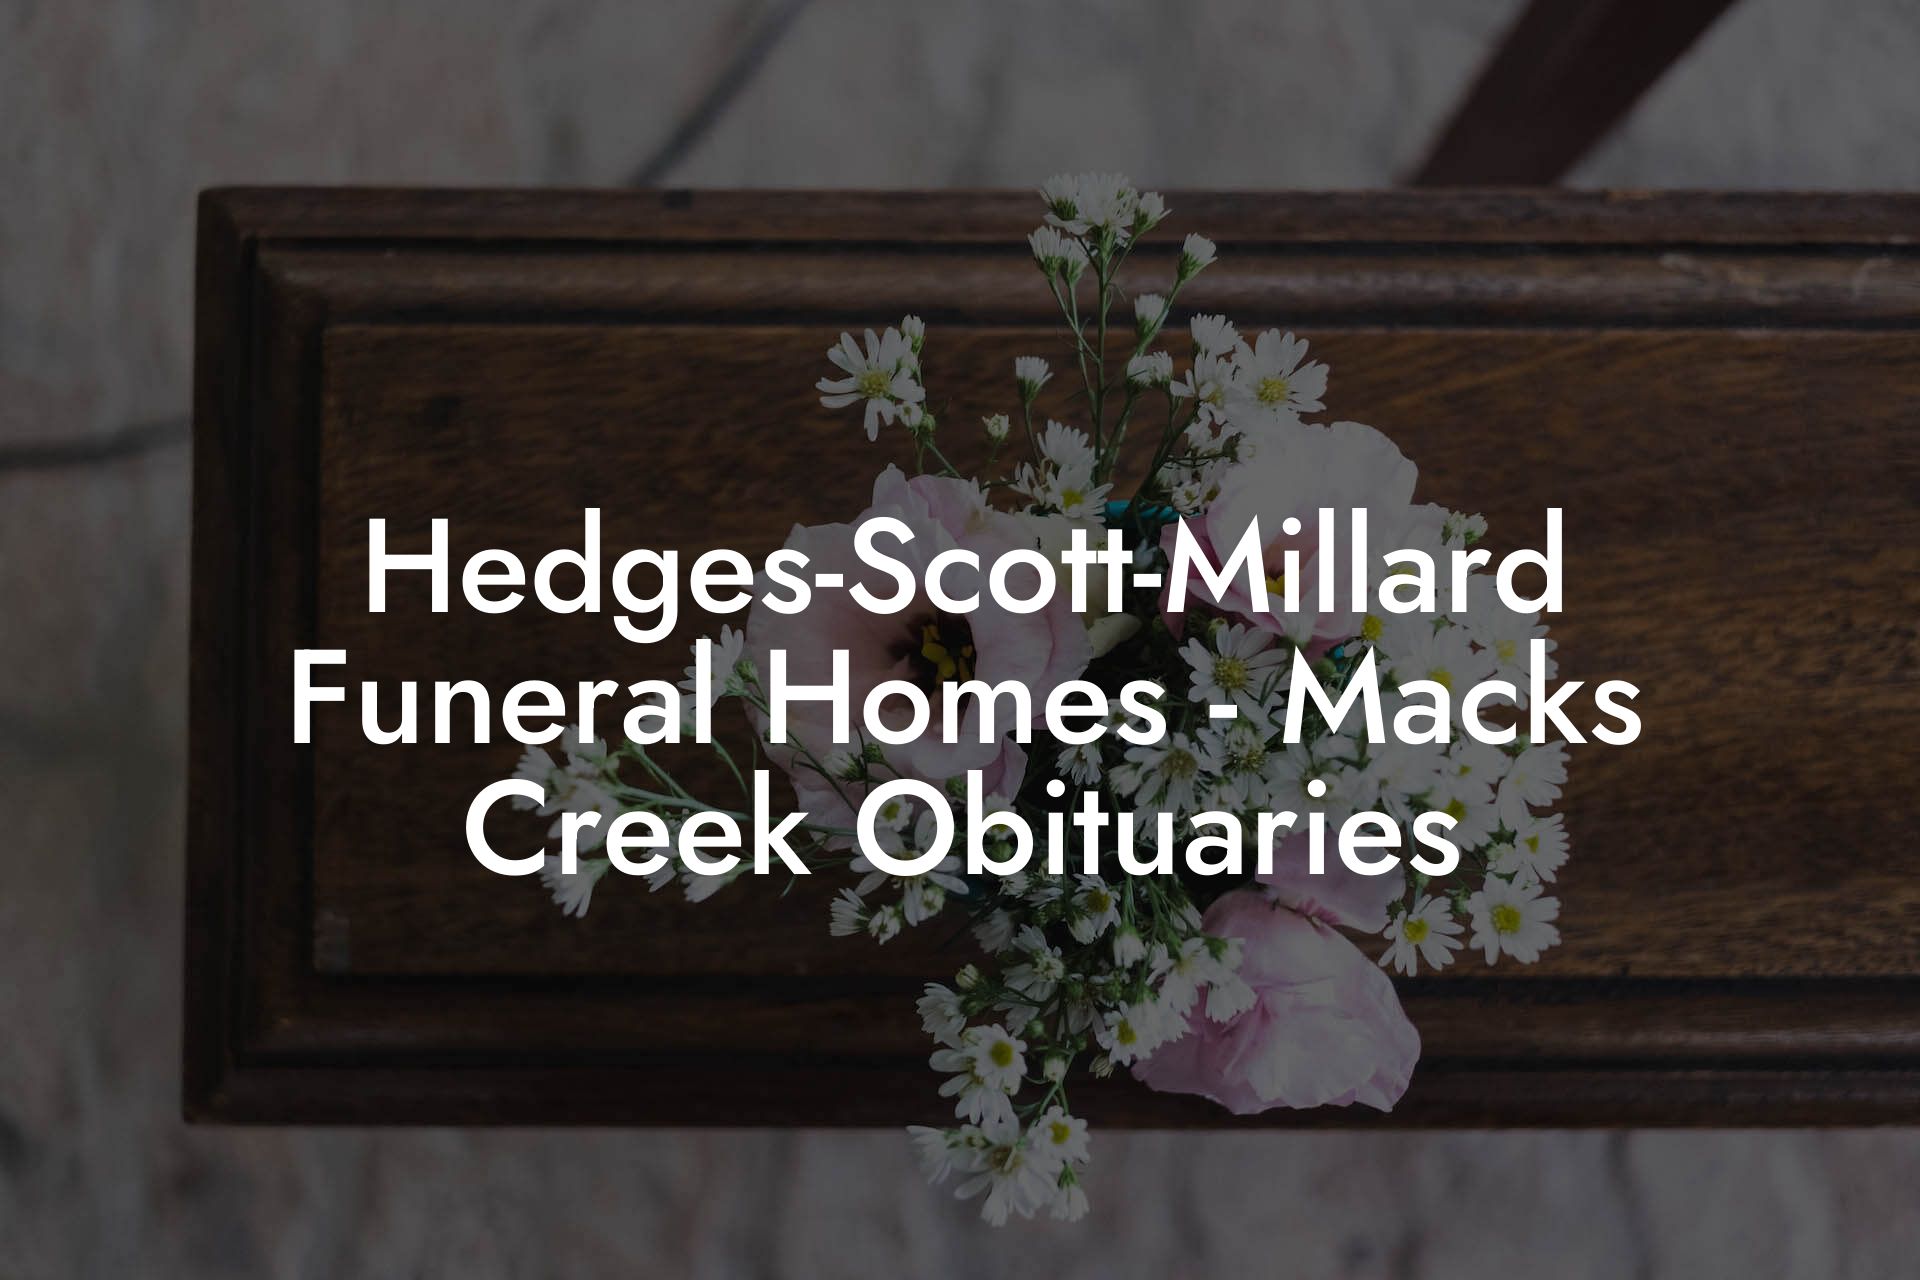 Hedges-Scott-Millard Funeral Homes - Macks Creek Obituaries